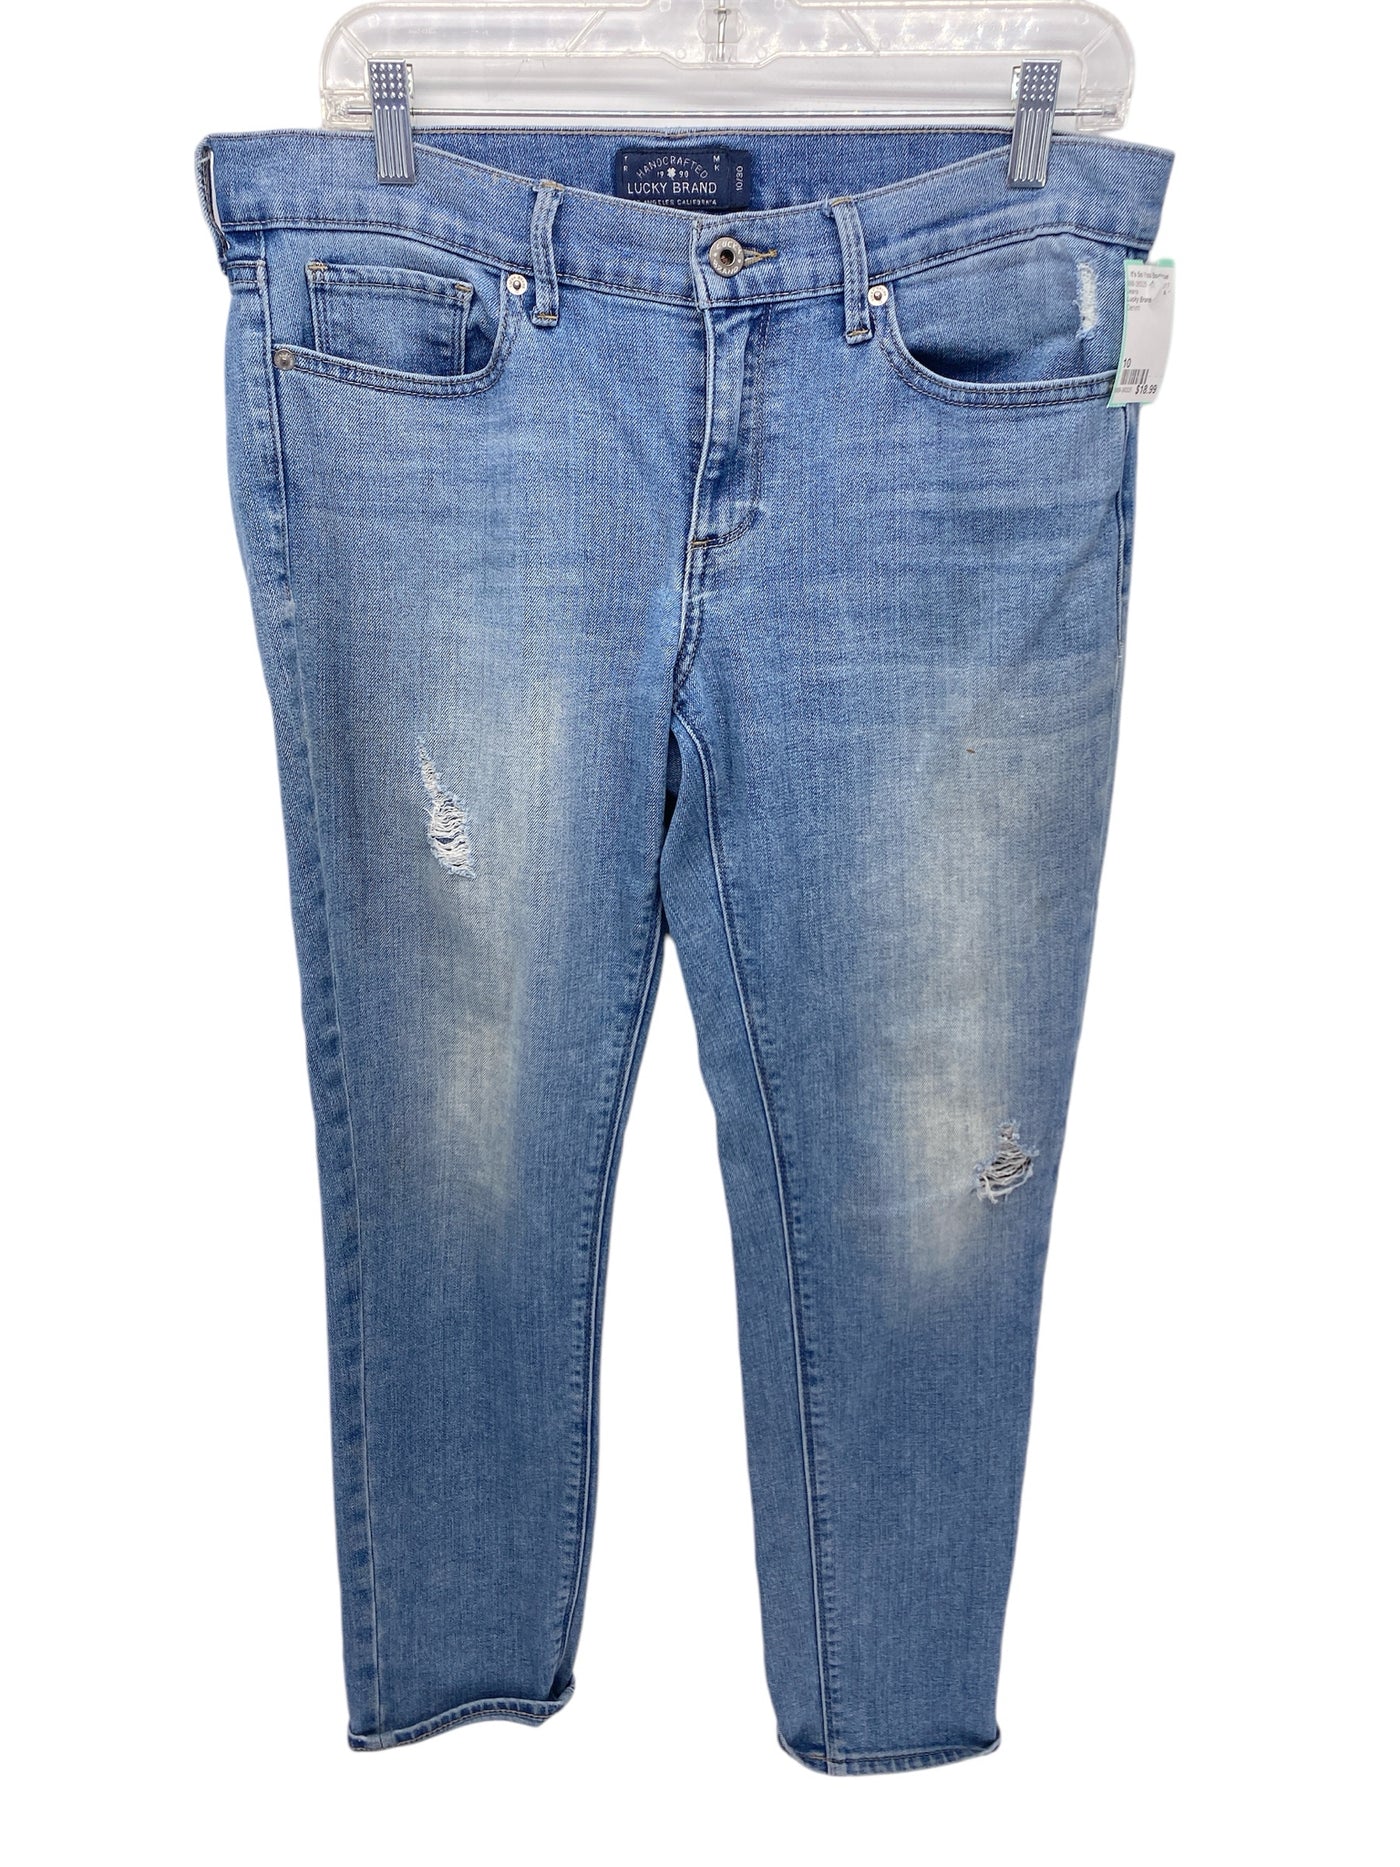 Lucky Brand Misses Size 10 Denim Jeans